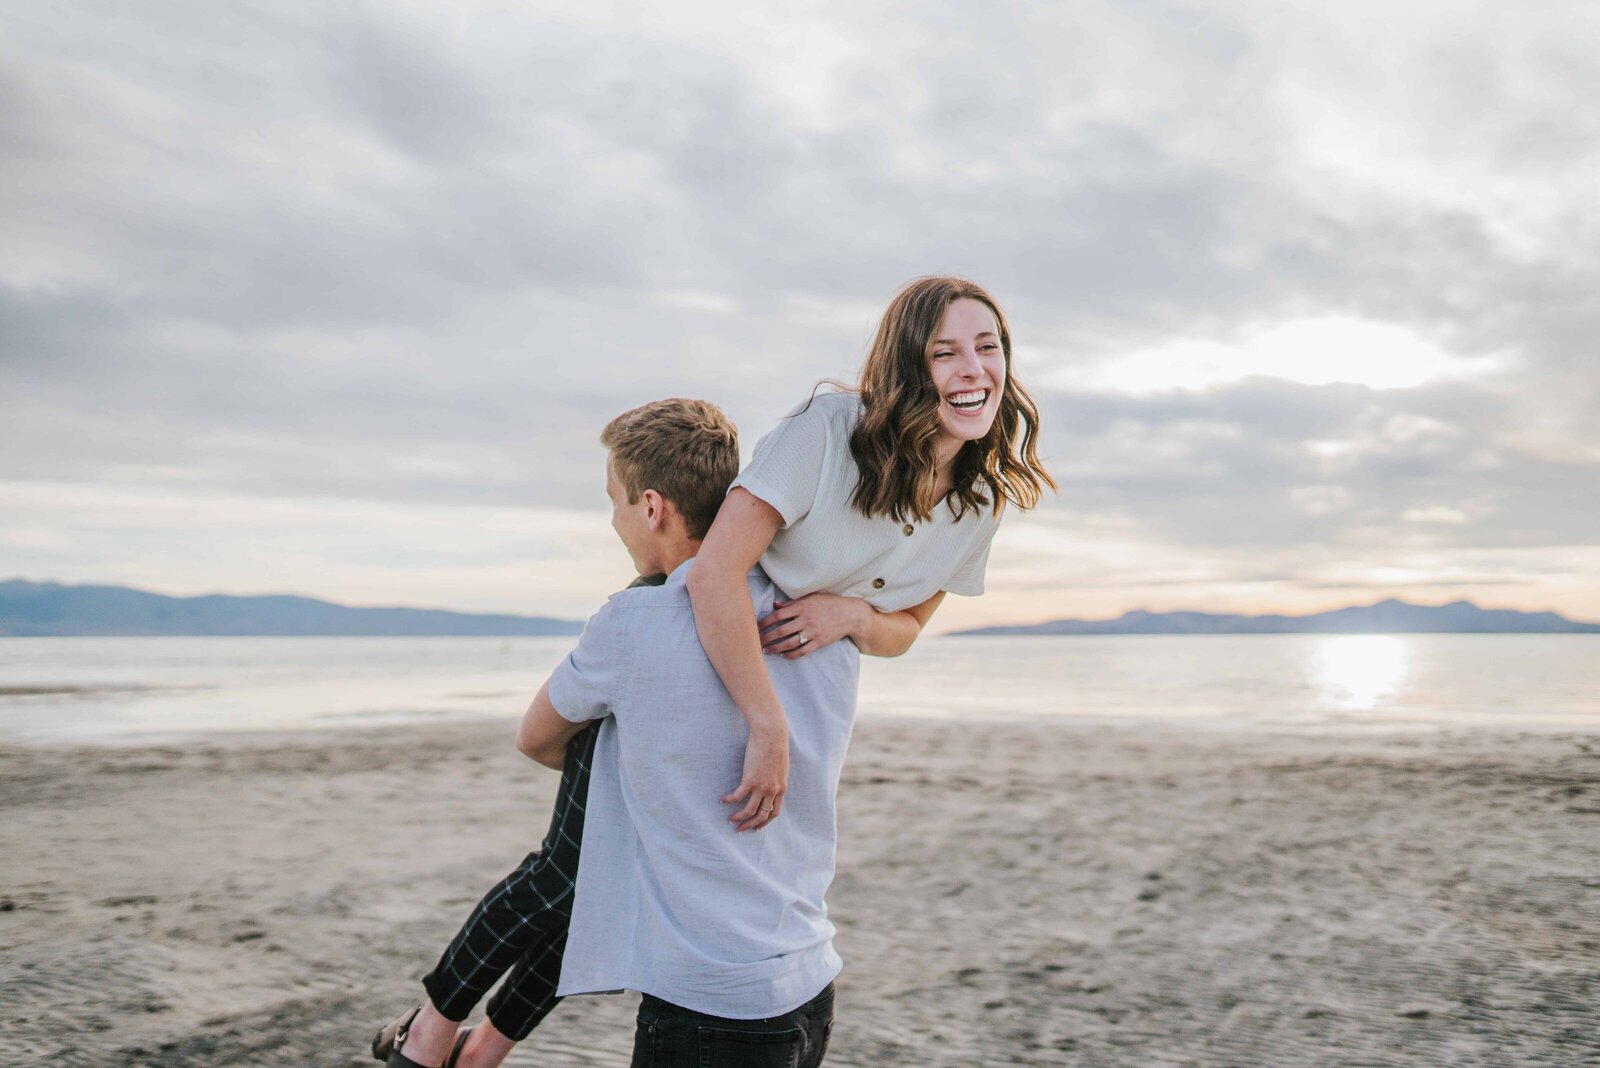 Sacramento Wedding Photographer captures man lifting woman up during outdoor engagements on beach